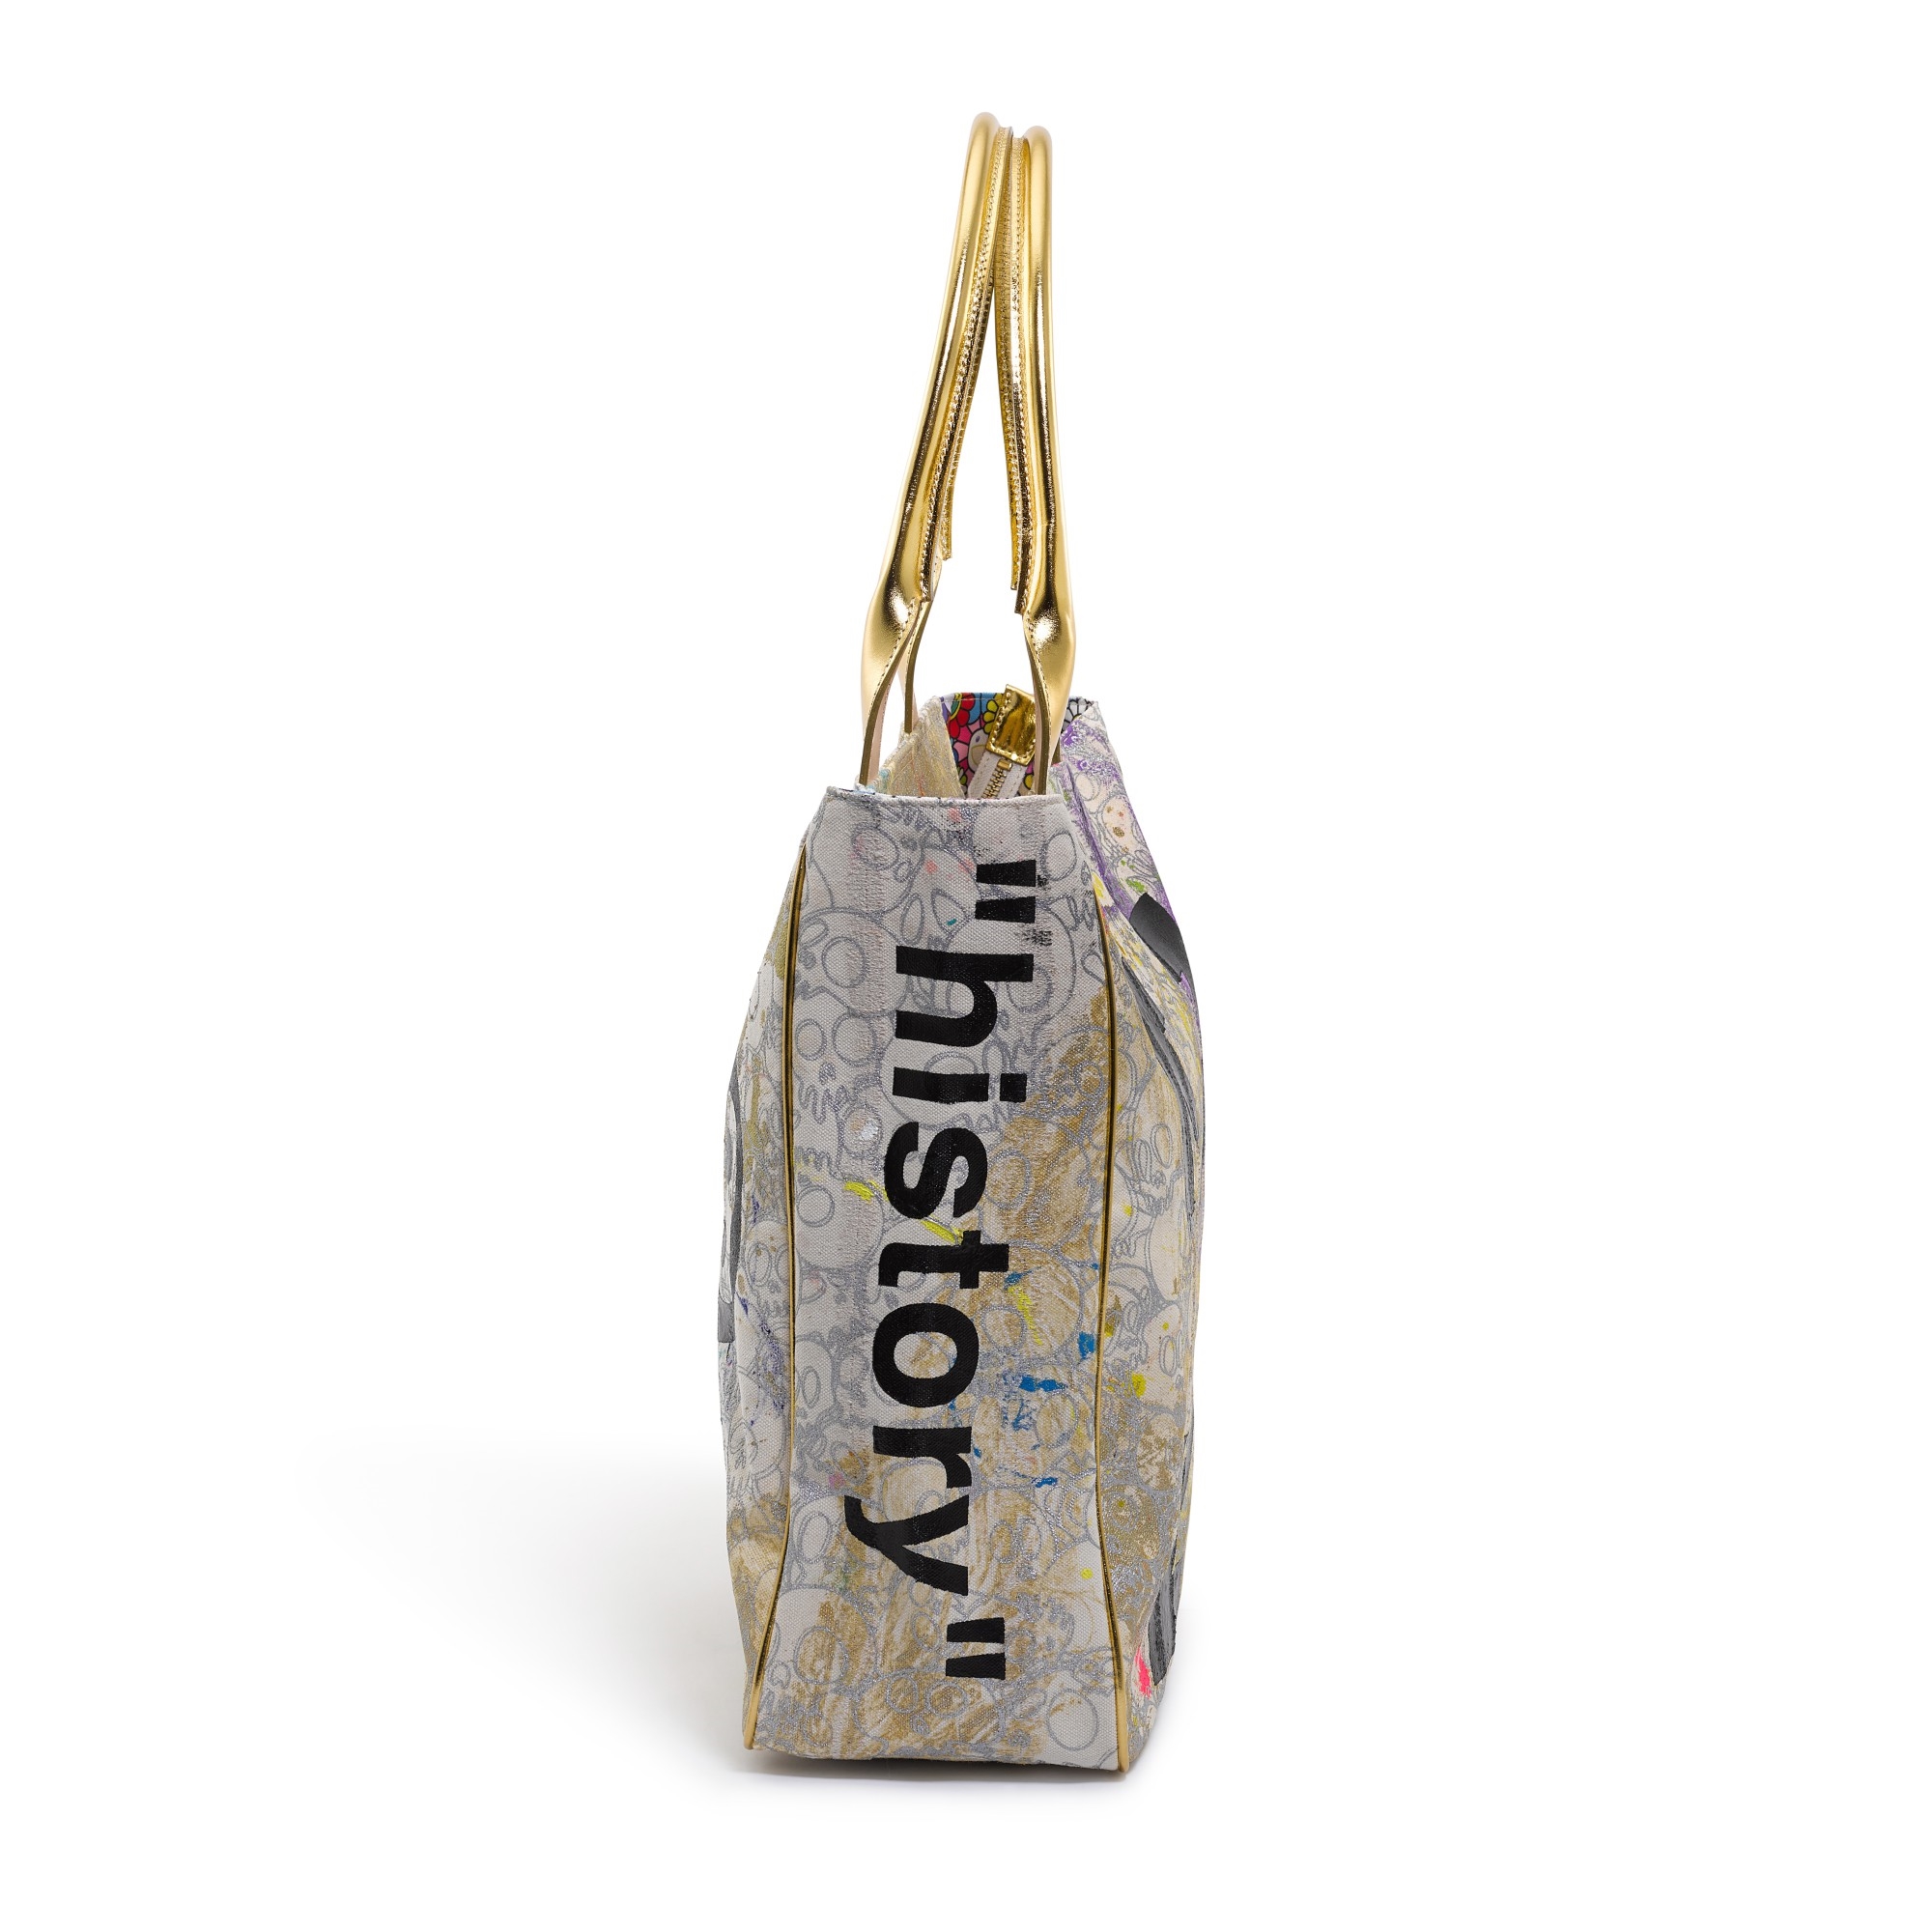 Hand Painted Takashi Murakami x KAWS Tote Bag